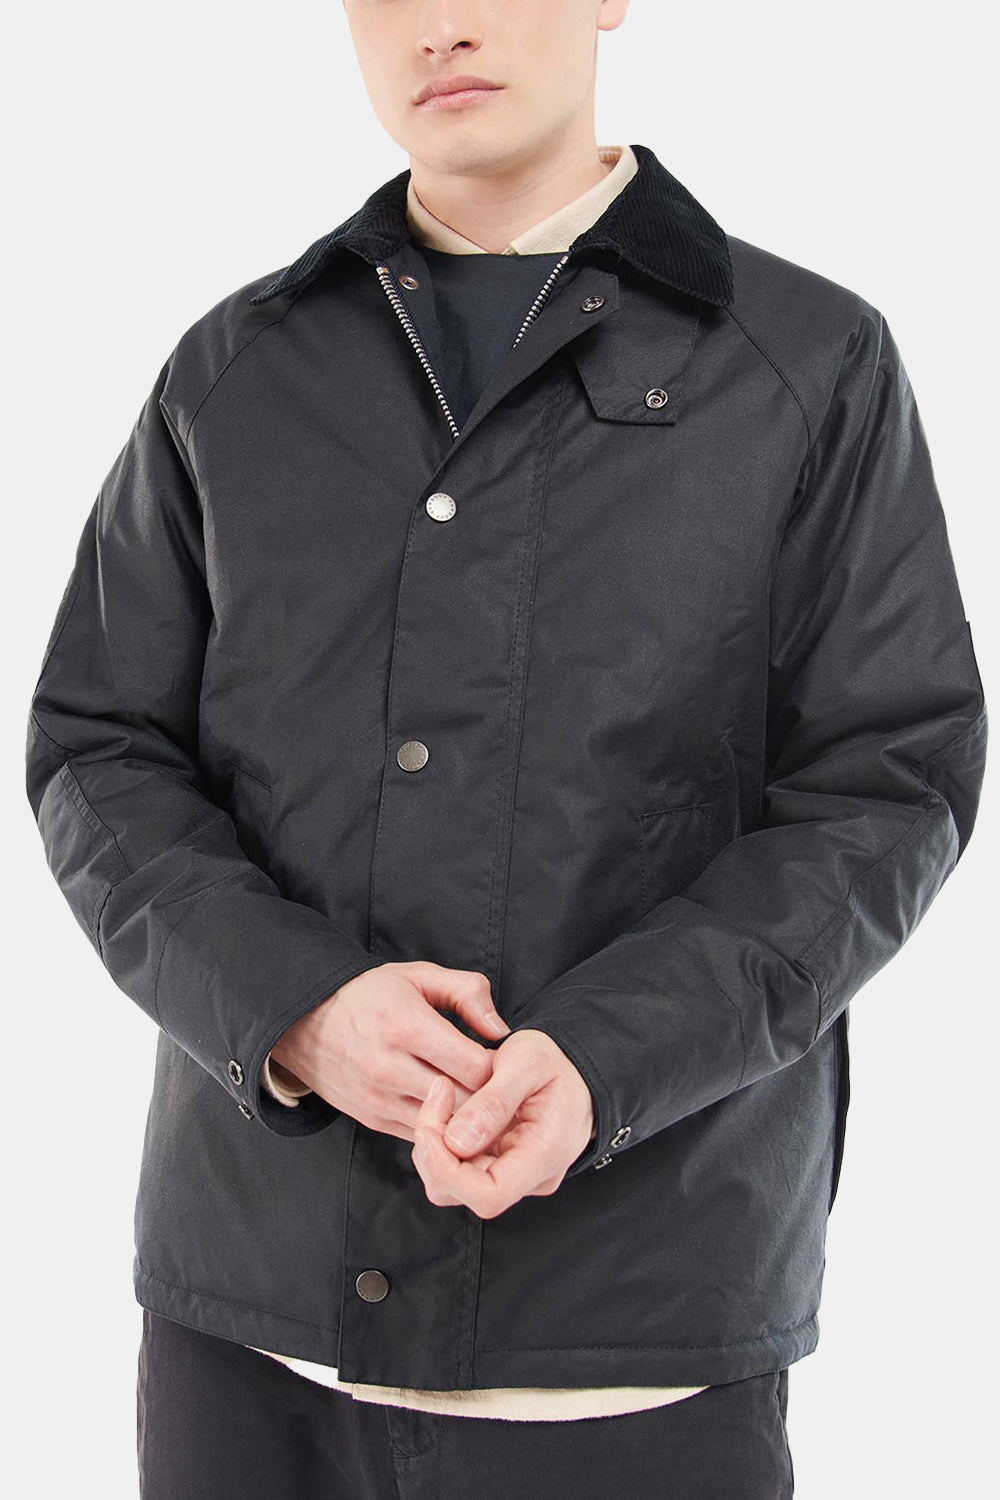 Barbour White Label SL Nara Wax Jacket (Navy)